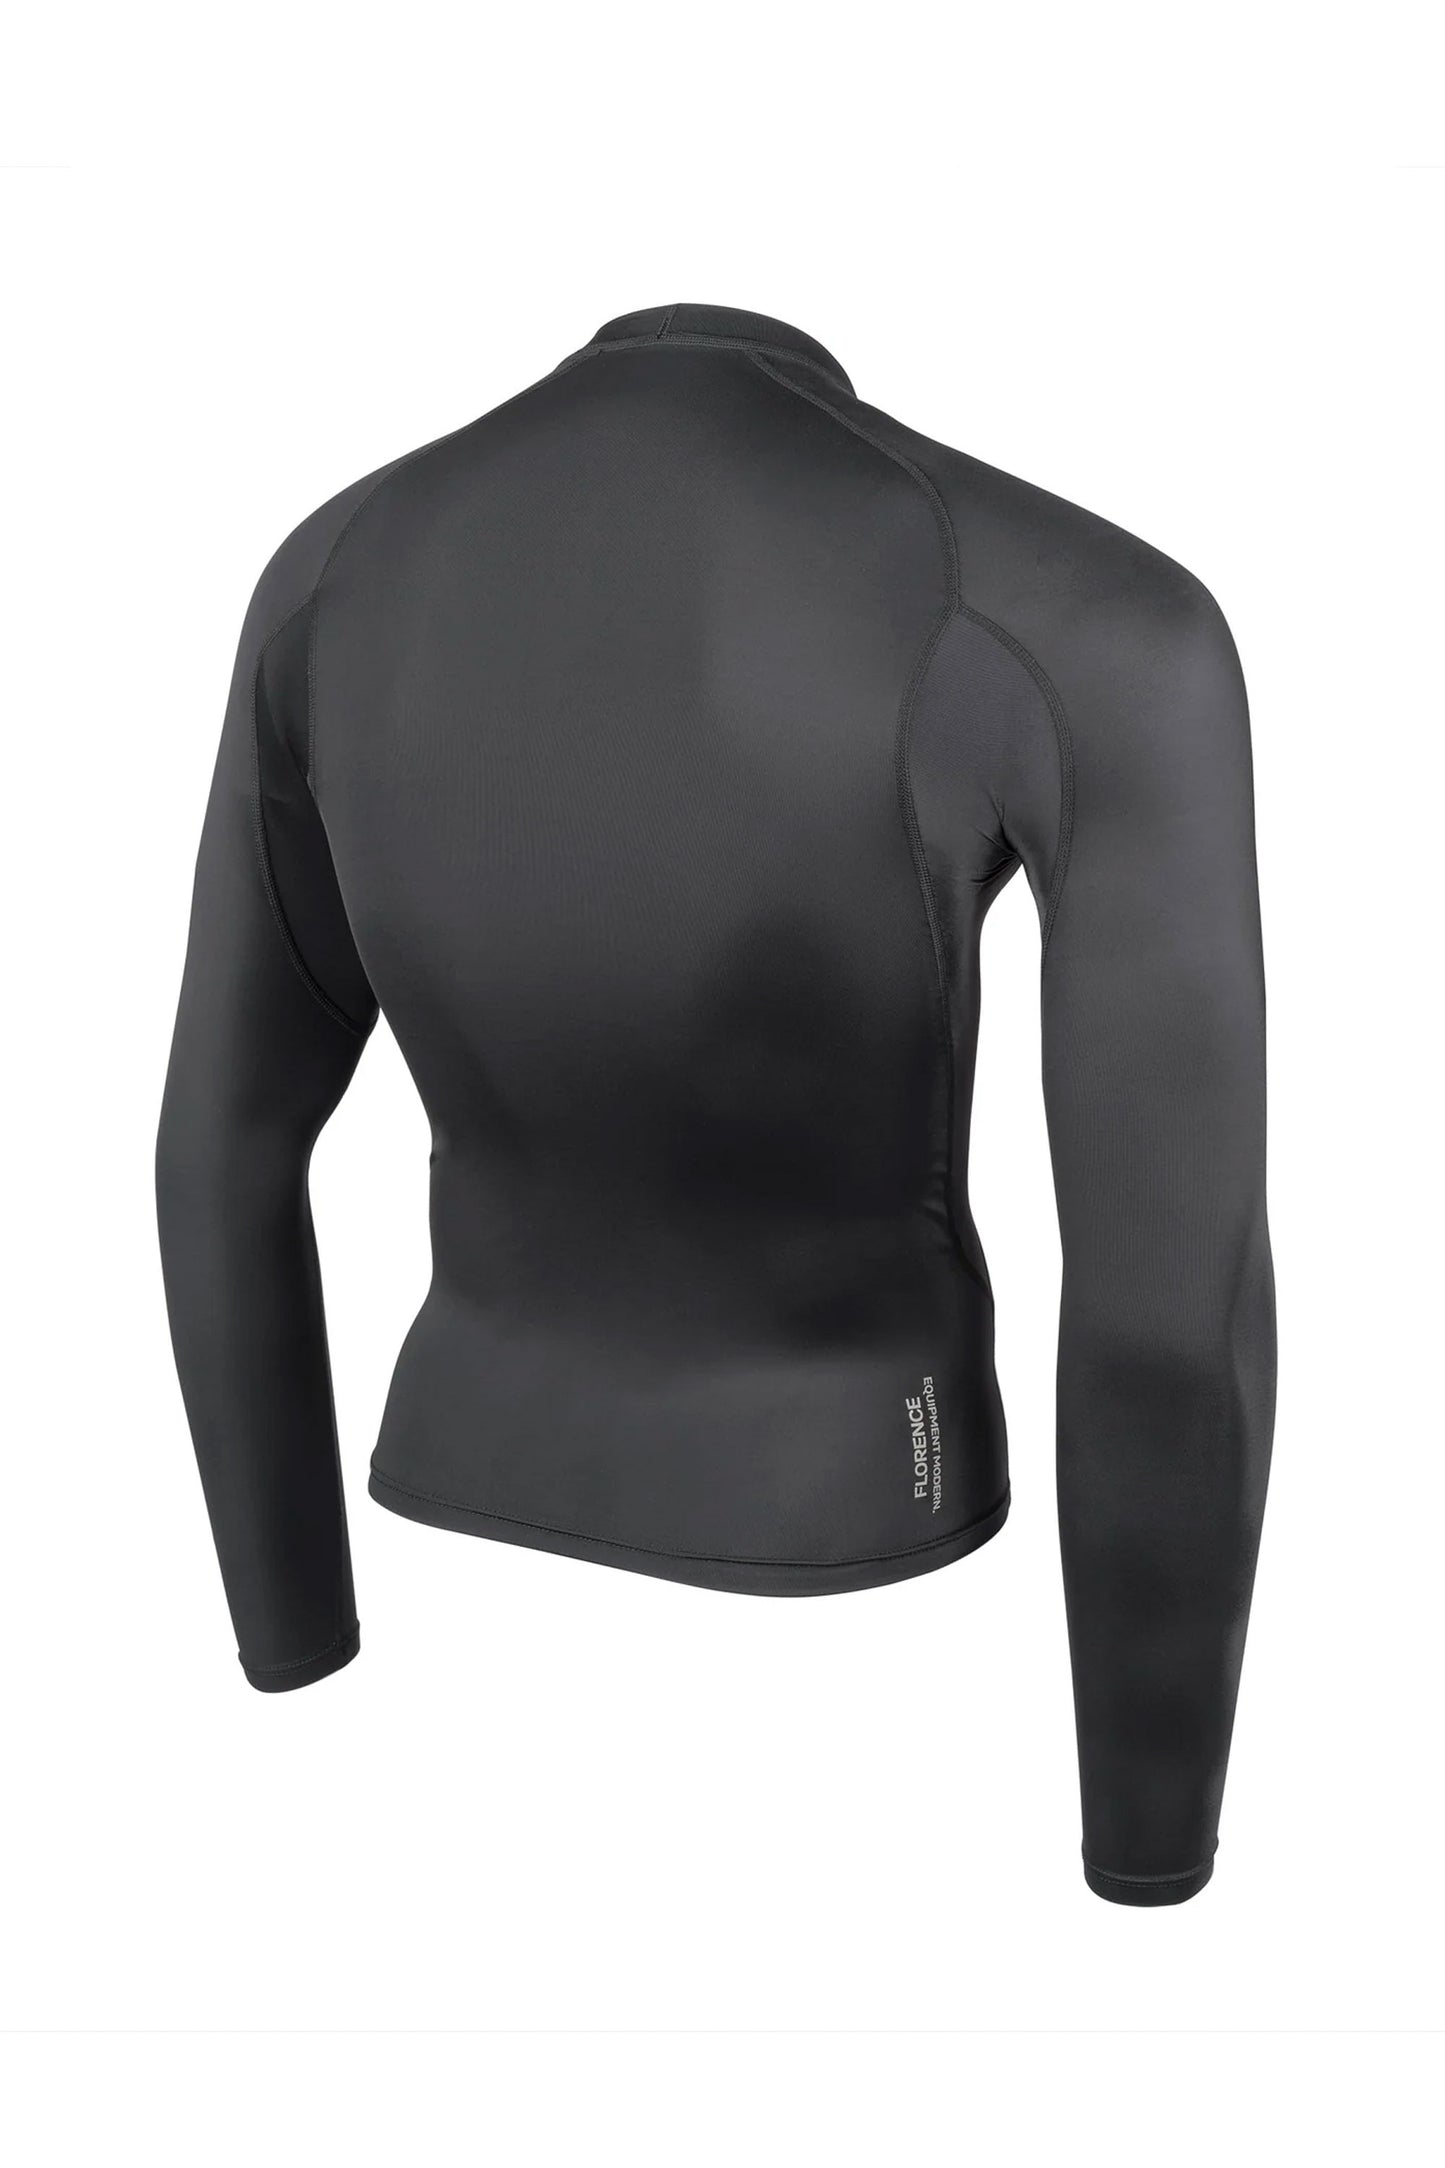 Pukas-Surf-Shop-florence-marine-windshield-long-sleeve-rashguard-black